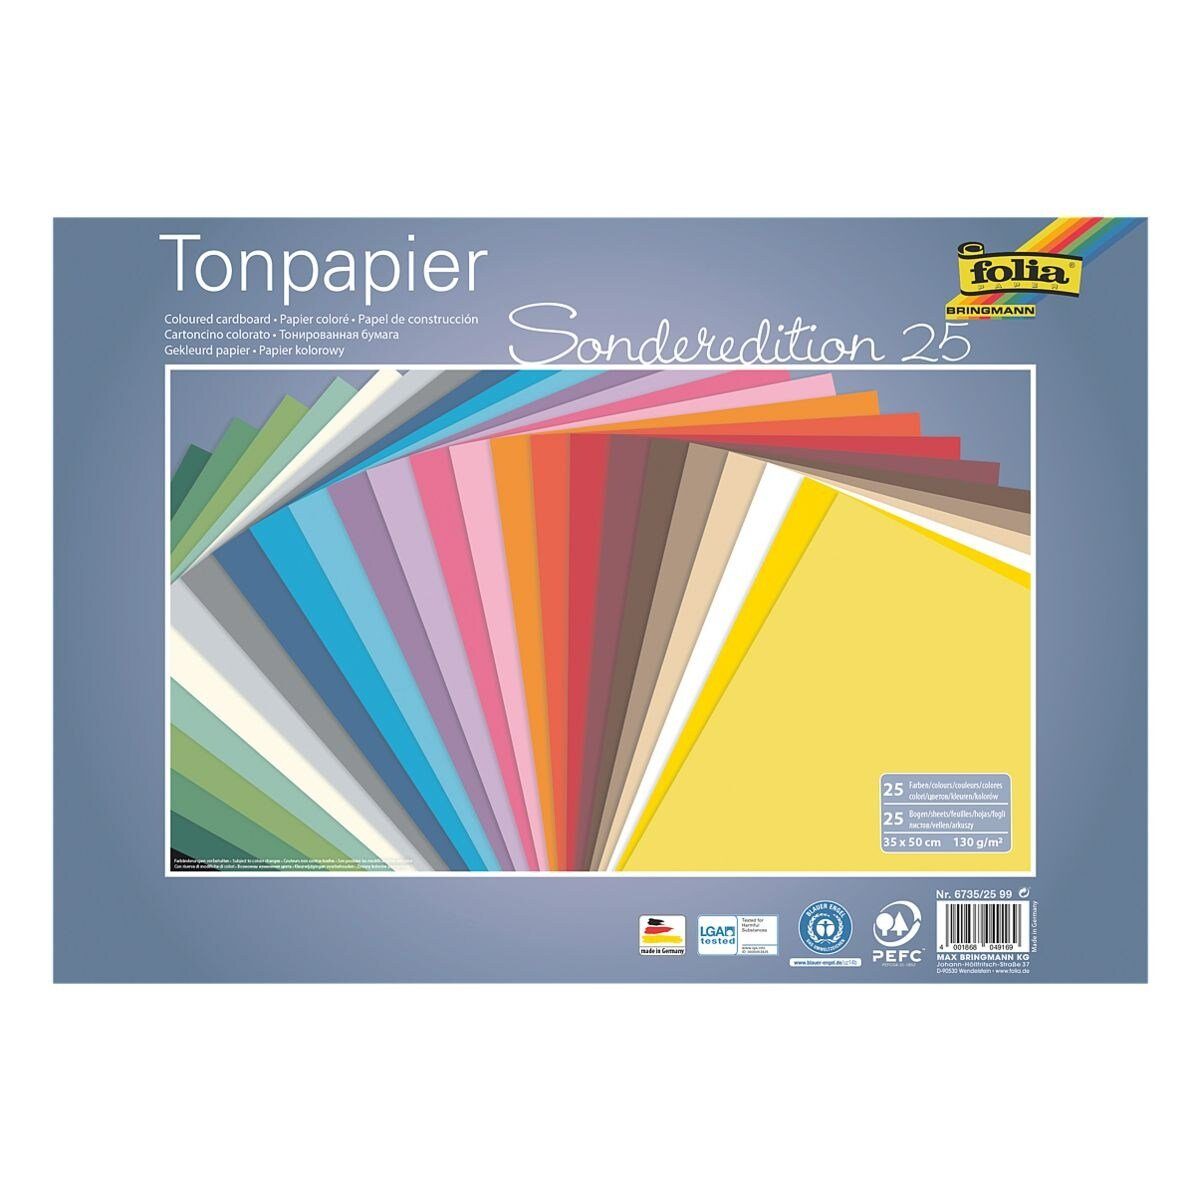 Folia Bastelkartonpapier Sonderedition 25, Tonpapier in 25 Farben, Format 35x50 cm, 130 g/m², 25 Blatt